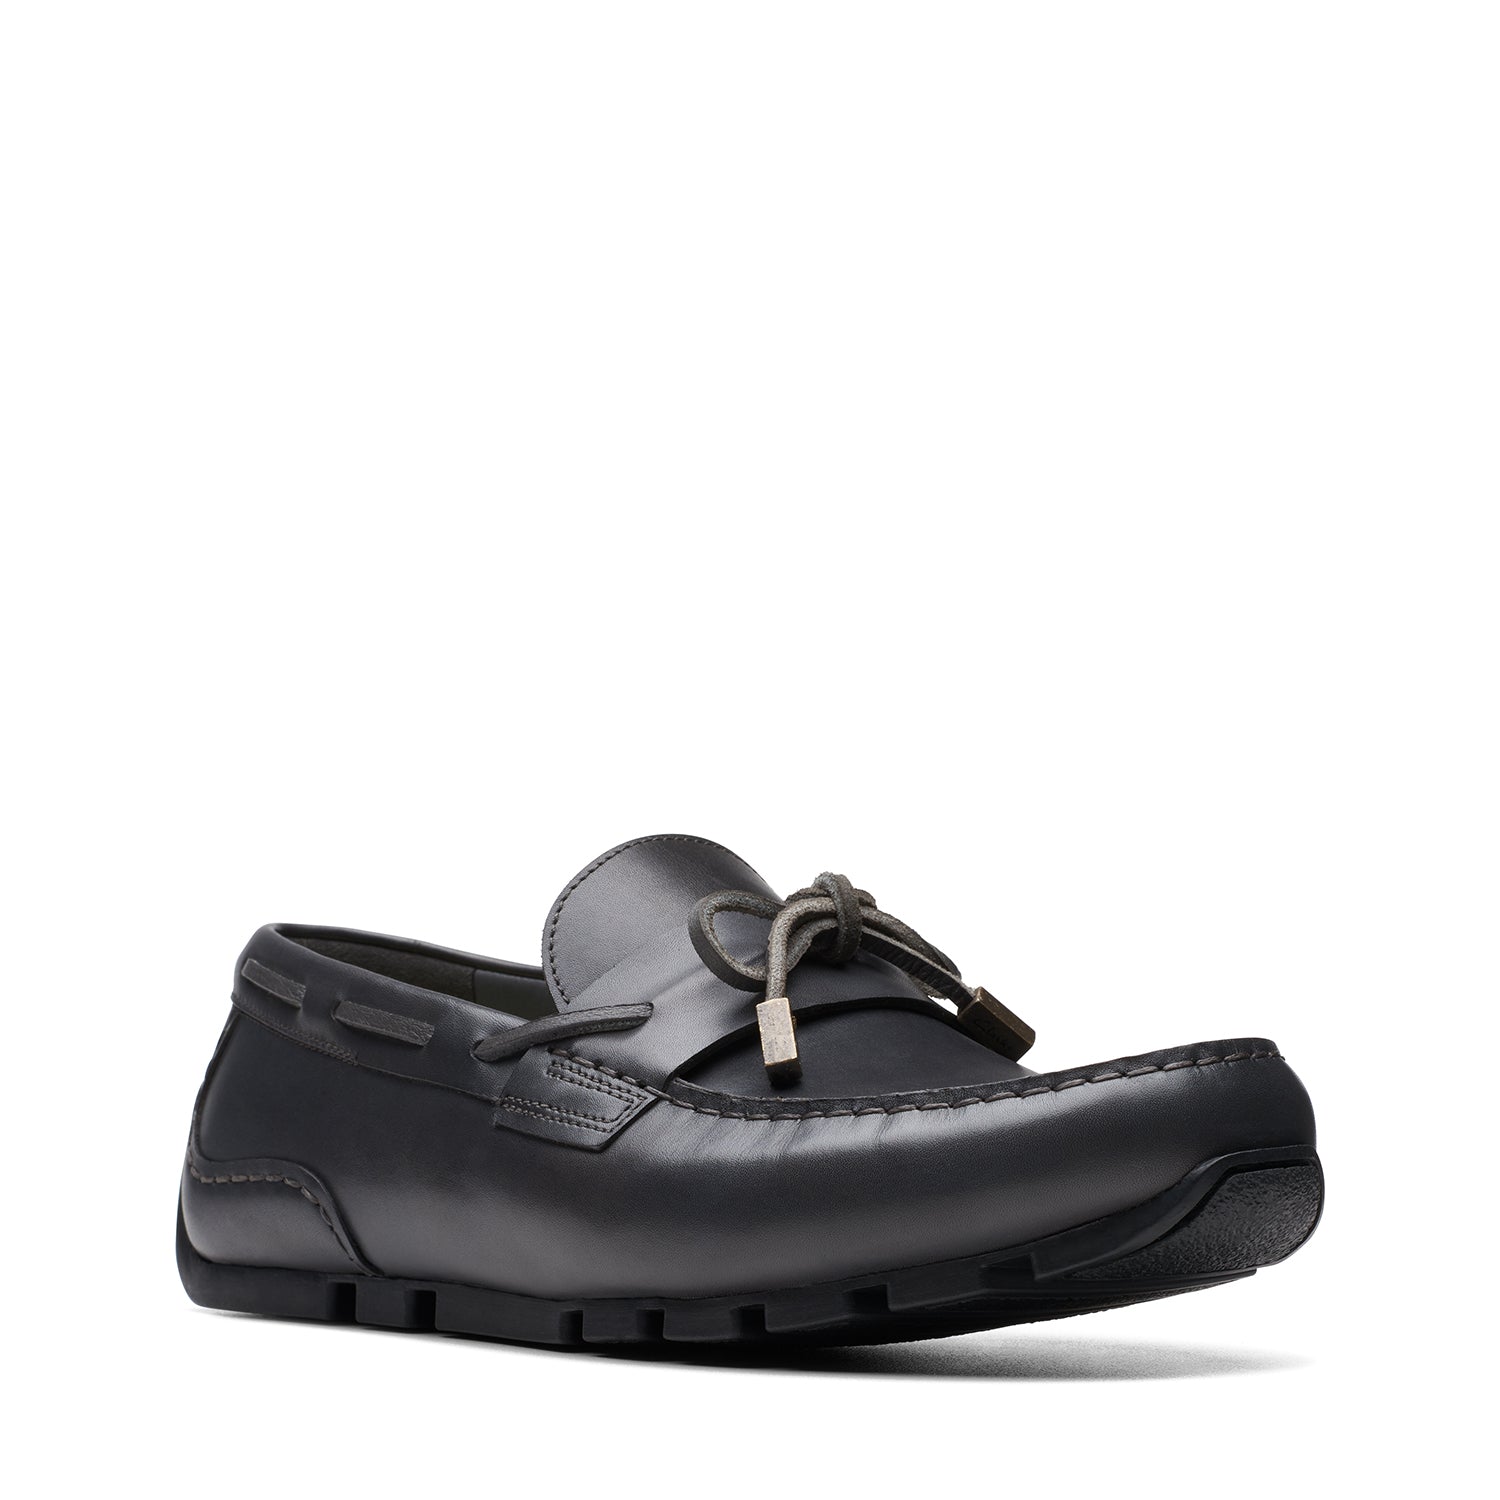 Clarks Oswick Step Shoes - Dark Grey Leather - 261756167 - G Width (Standard Fit)